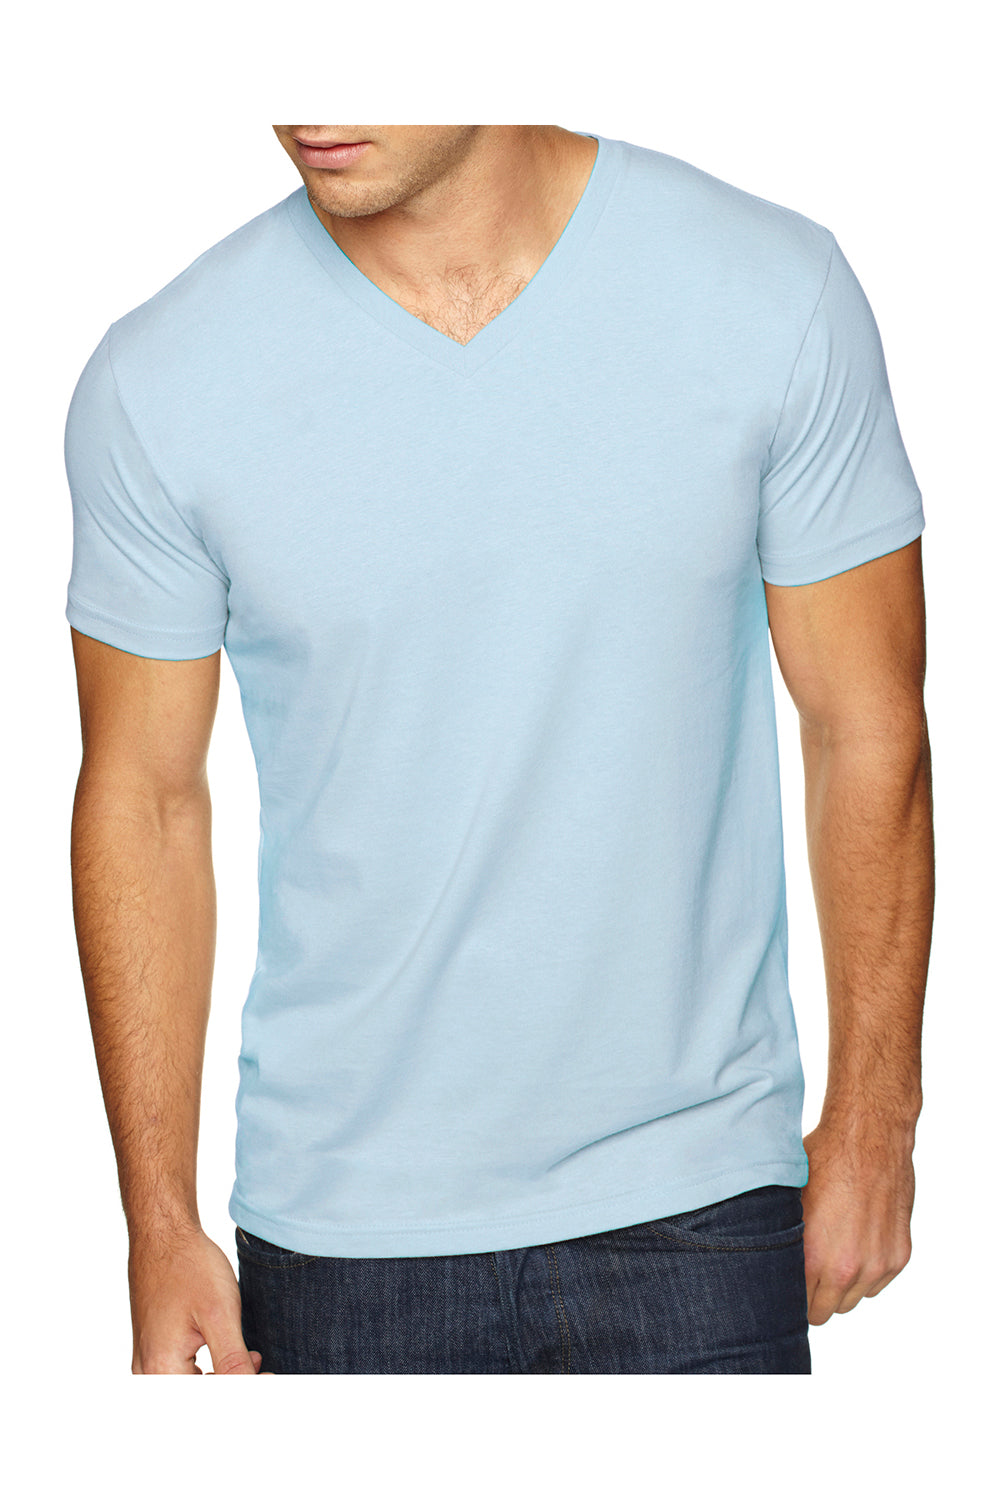 Next Level 6440 Mens Sueded Jersey Short Sleeve V-Neck T-Shirt Light Blue Front